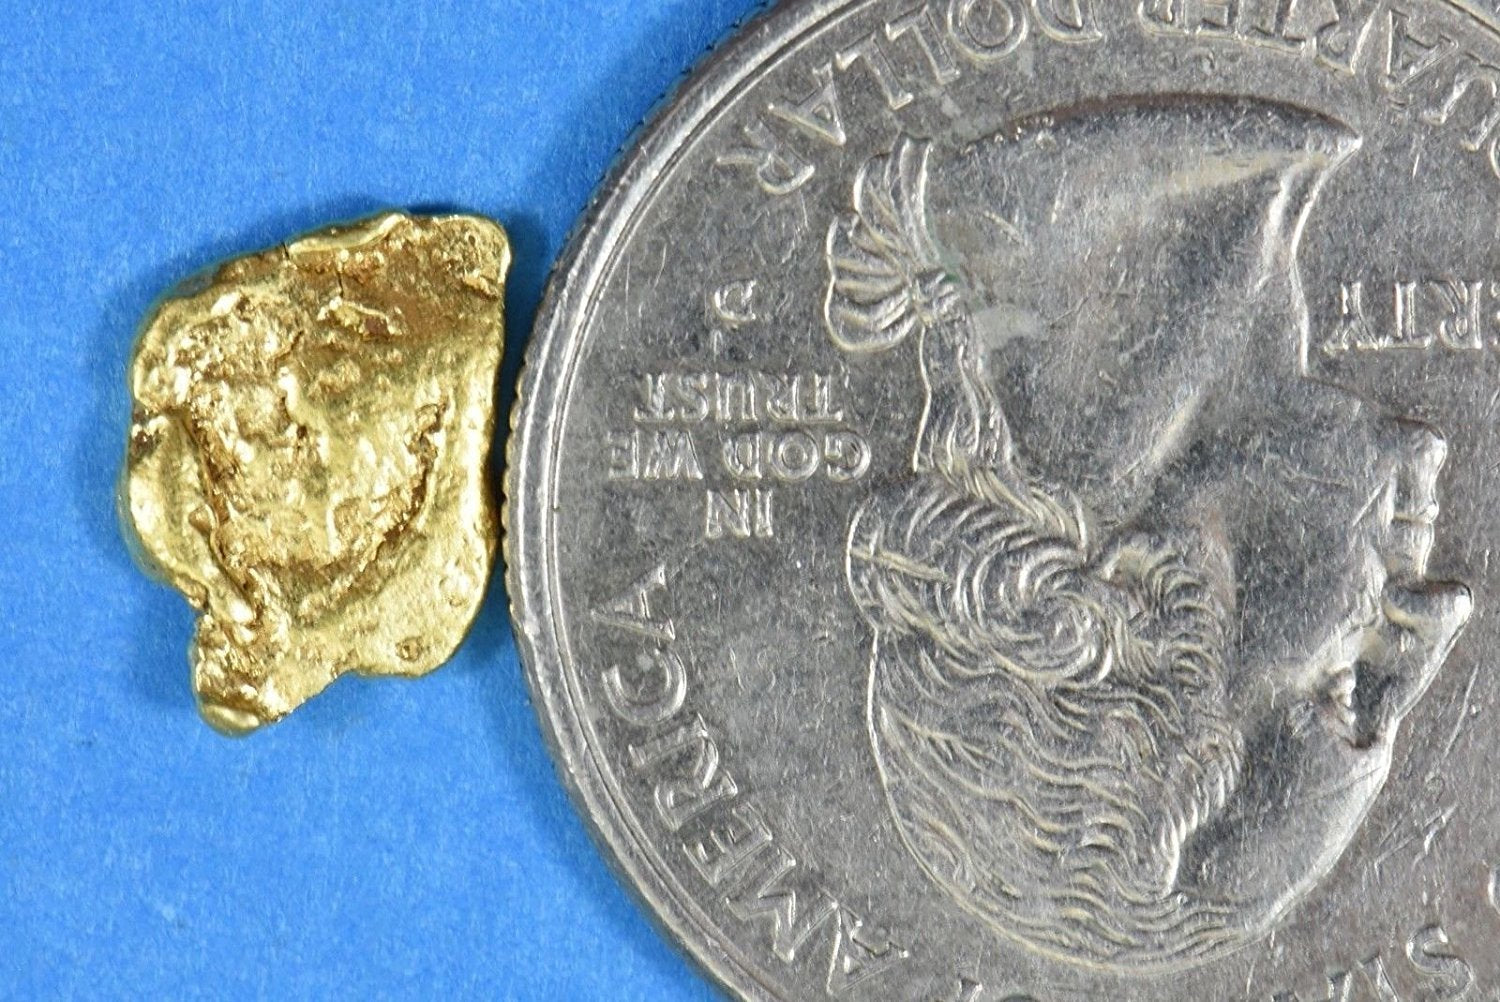 Alaskan Bc Natural Gold Nugget 100 Gram Lot Of .70 To 5 Gram Nuggets Genuine Alaska Lots/groups